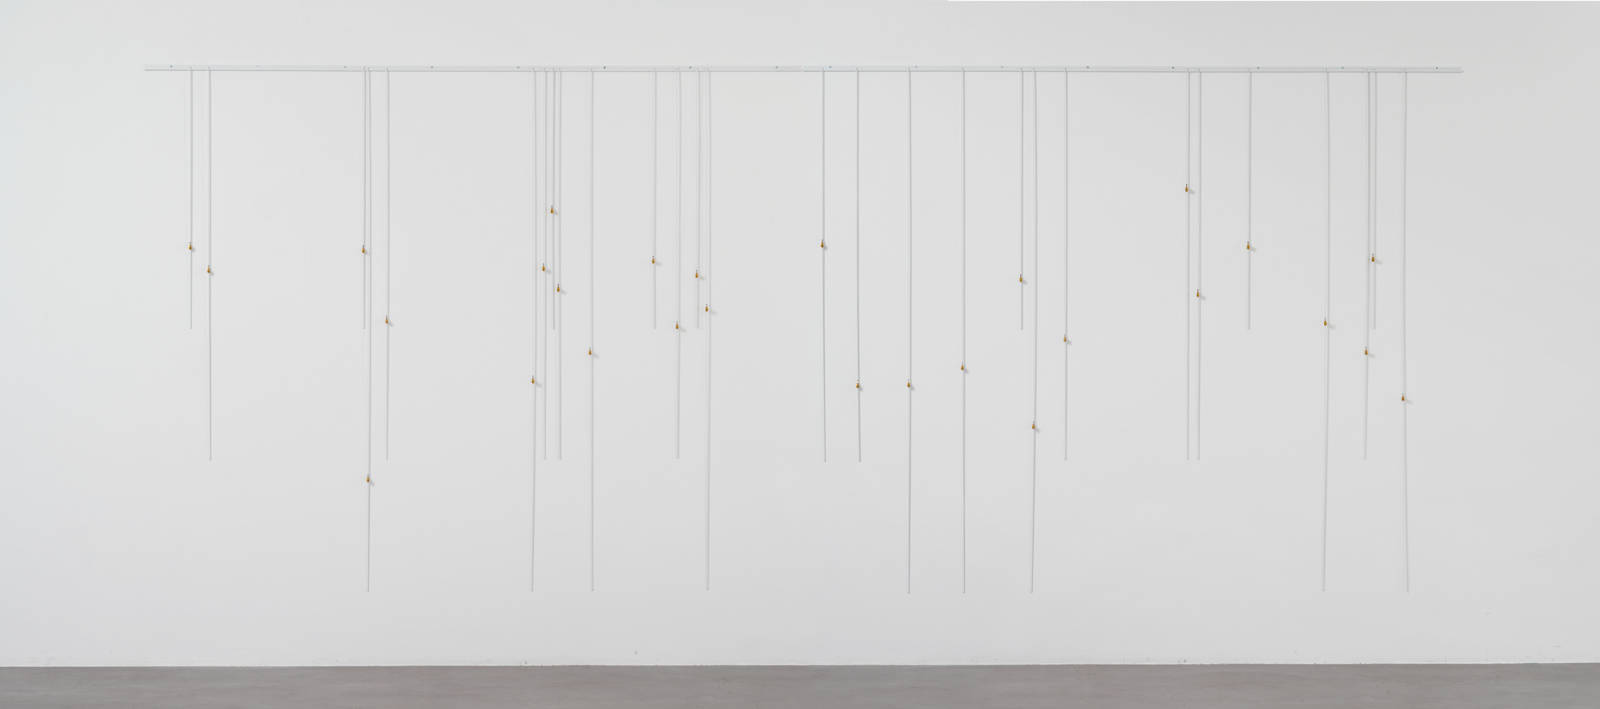 Latifa Echakhch / Galerie Eva Presenhuber